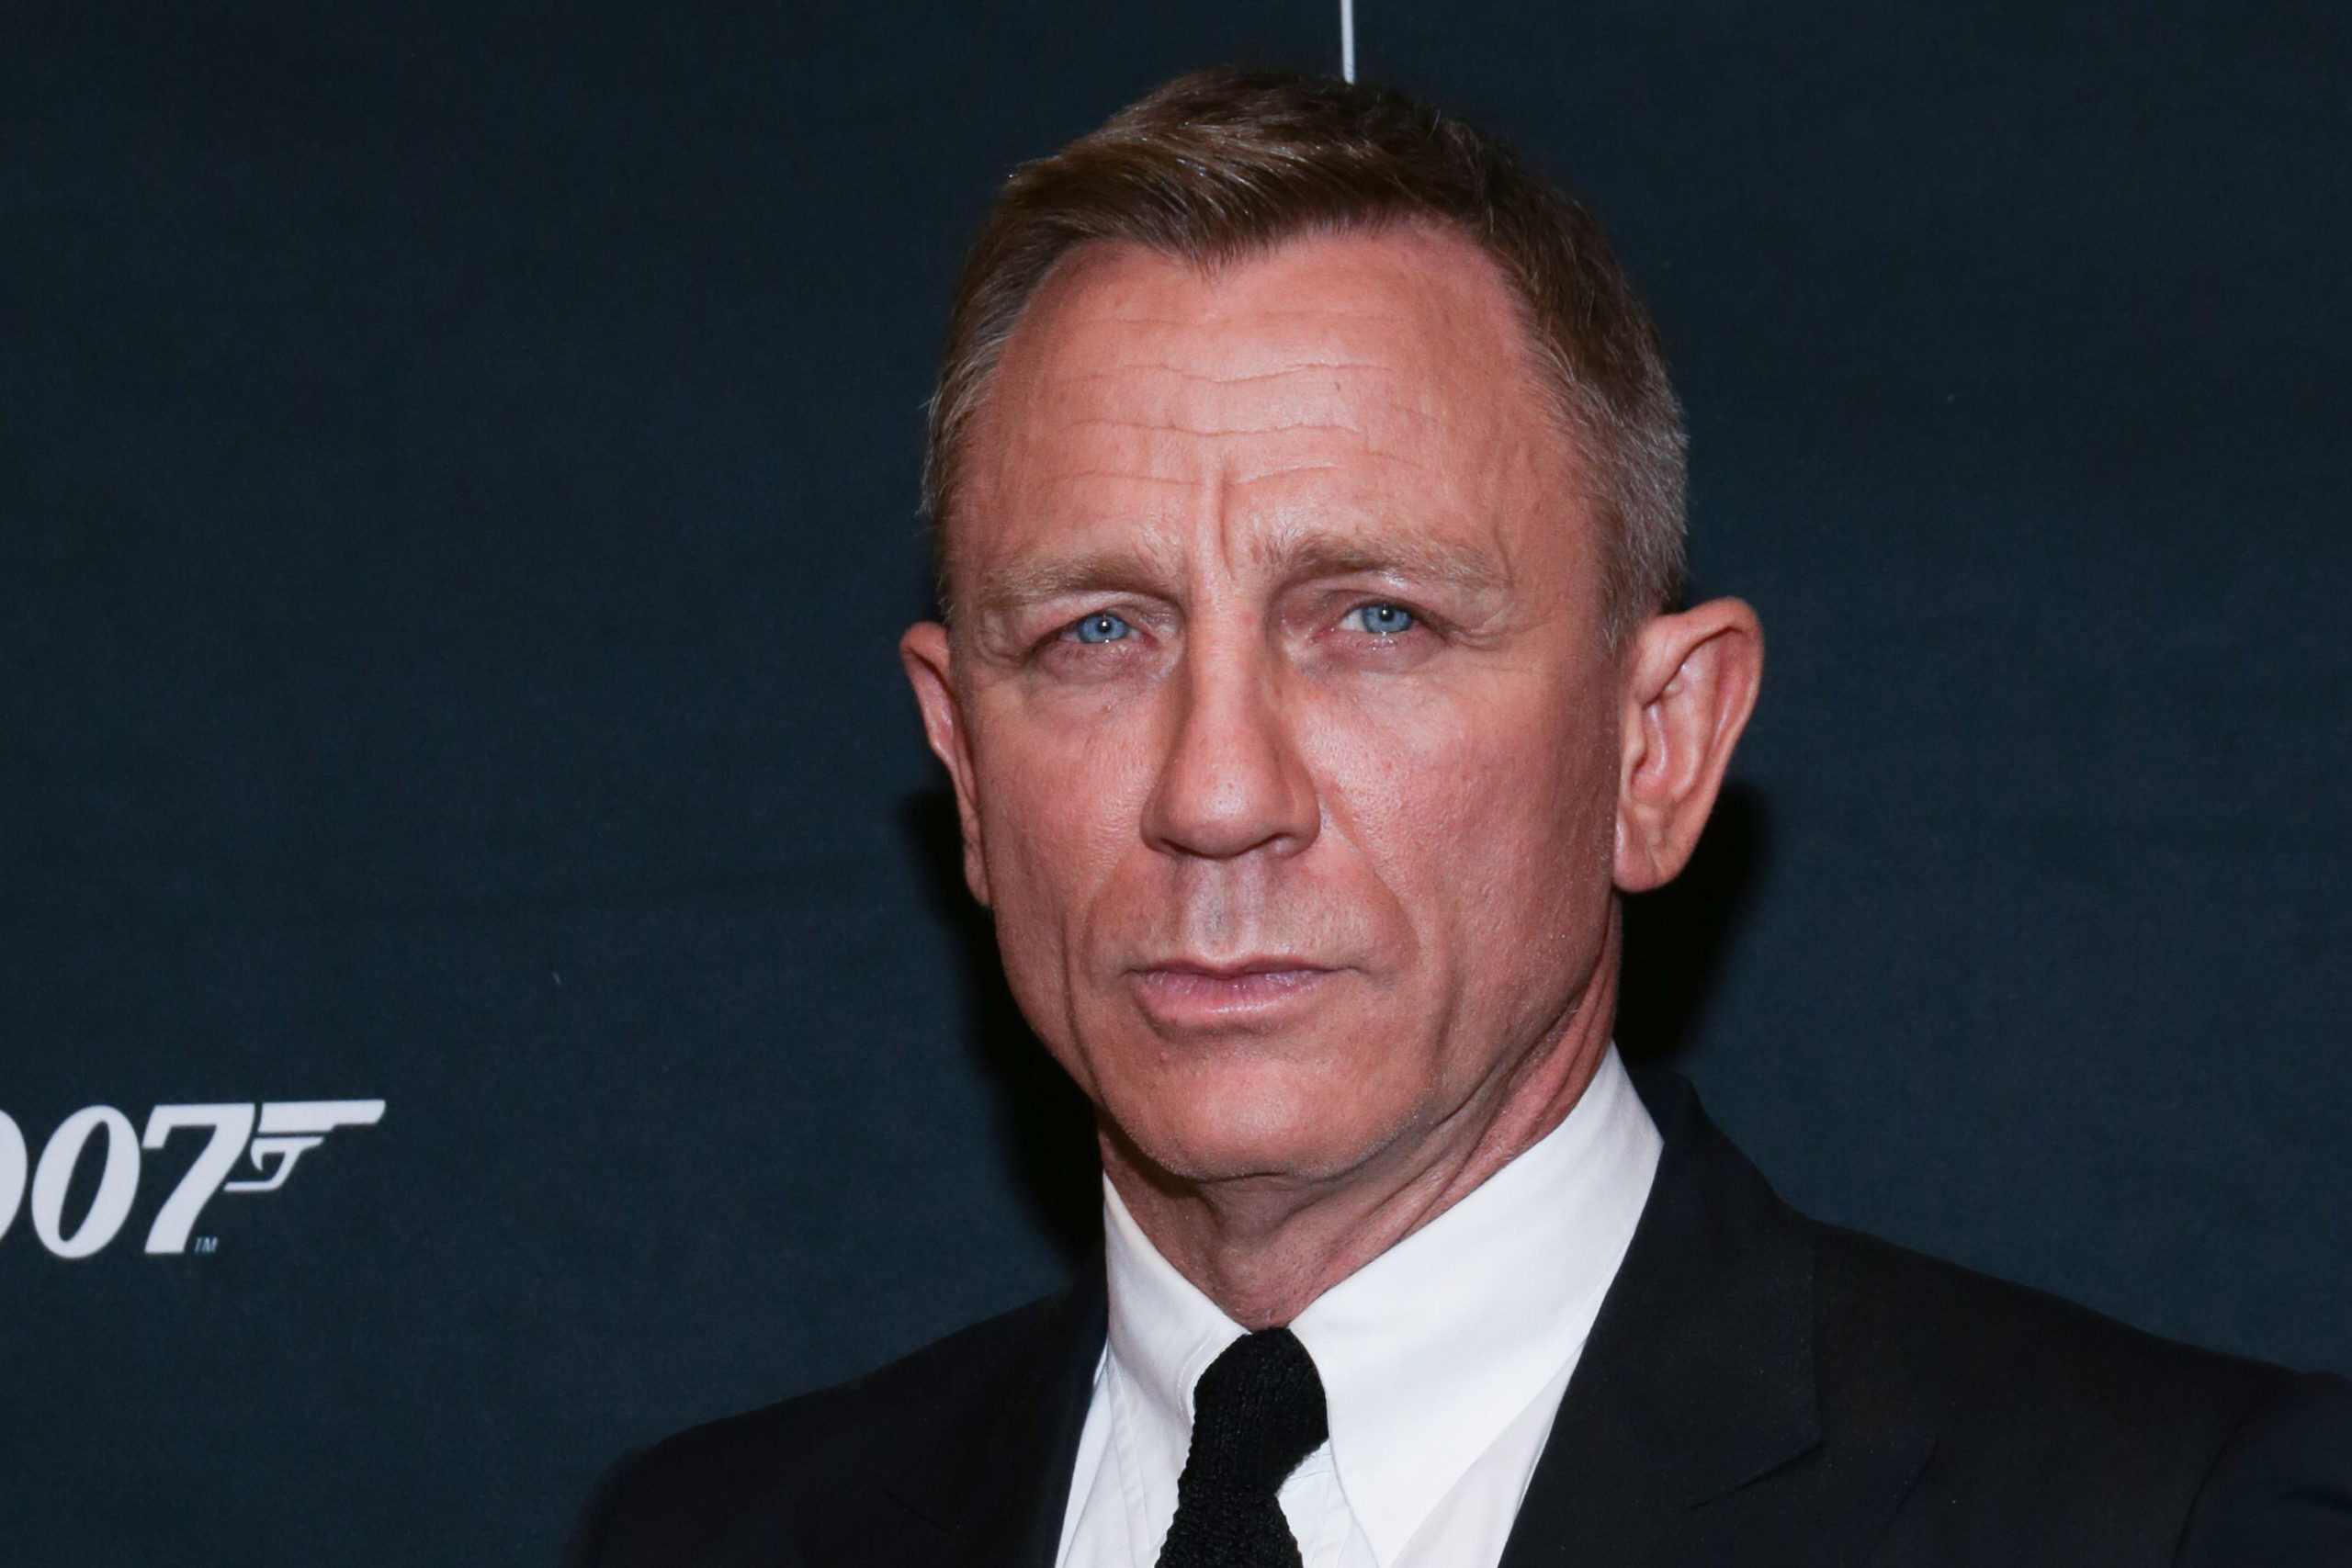 James Bond star Daniel Craig